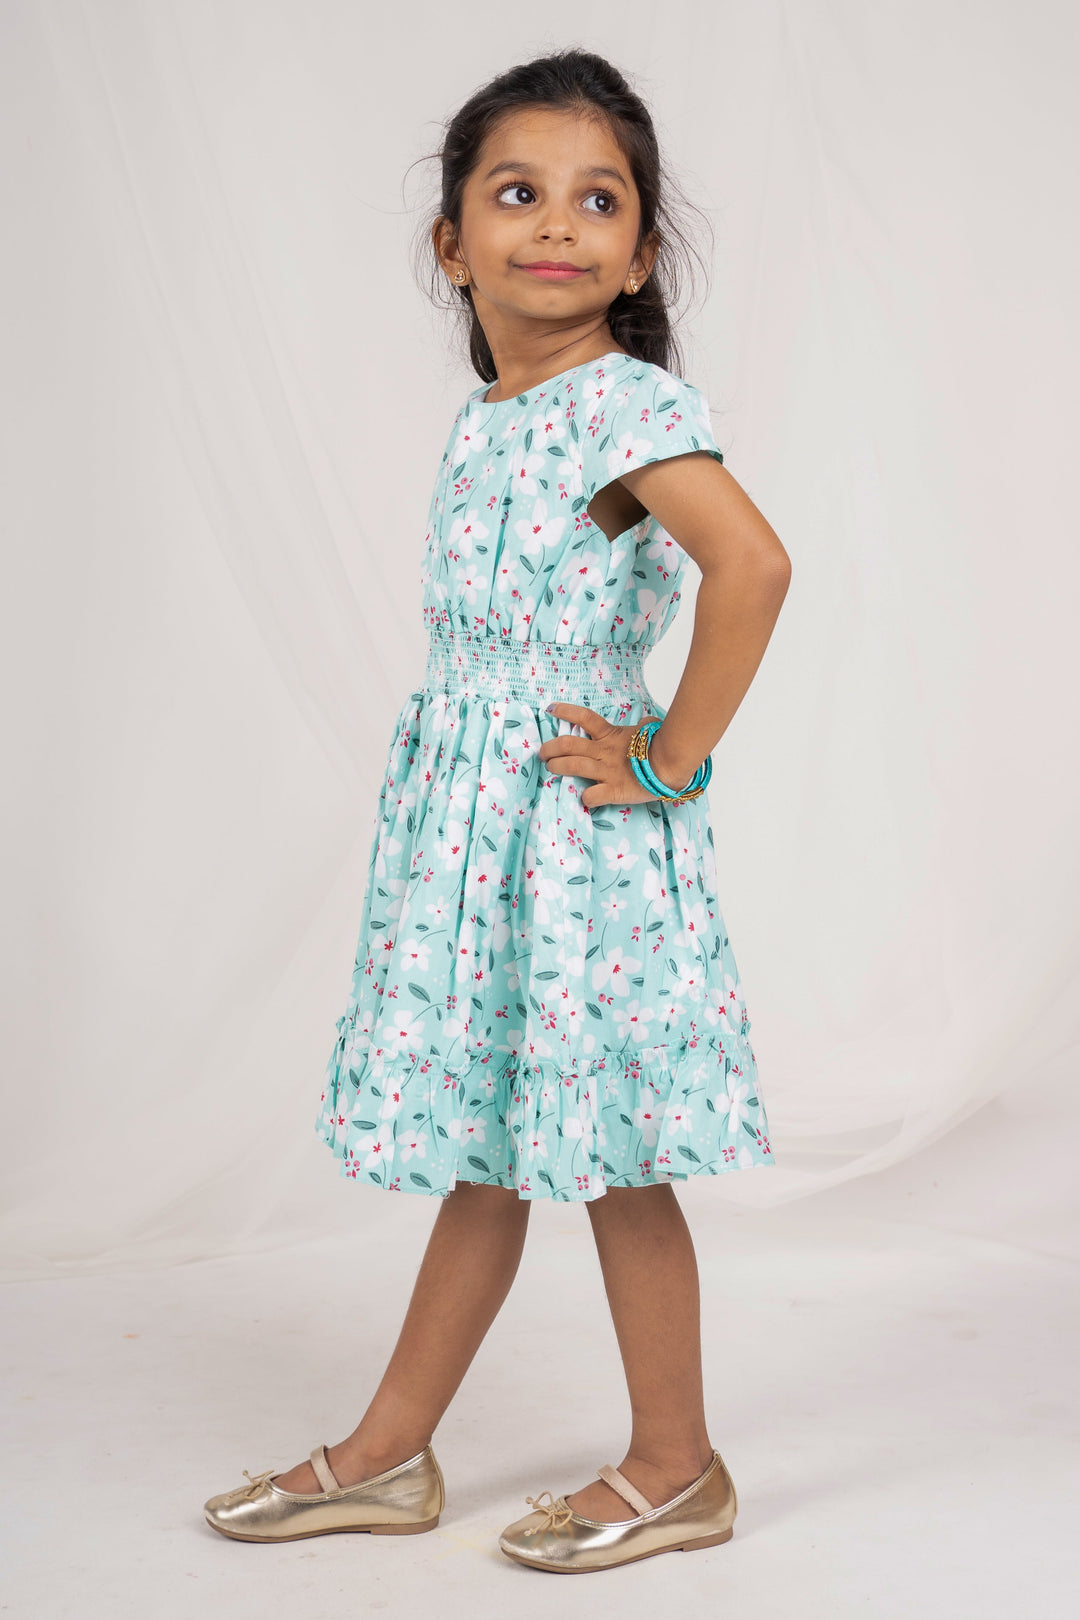 The Nesavu Frocks & Dresses New Designer Elastic Waist Soft Cotton Frock For Baby Girls psr silks Nesavu